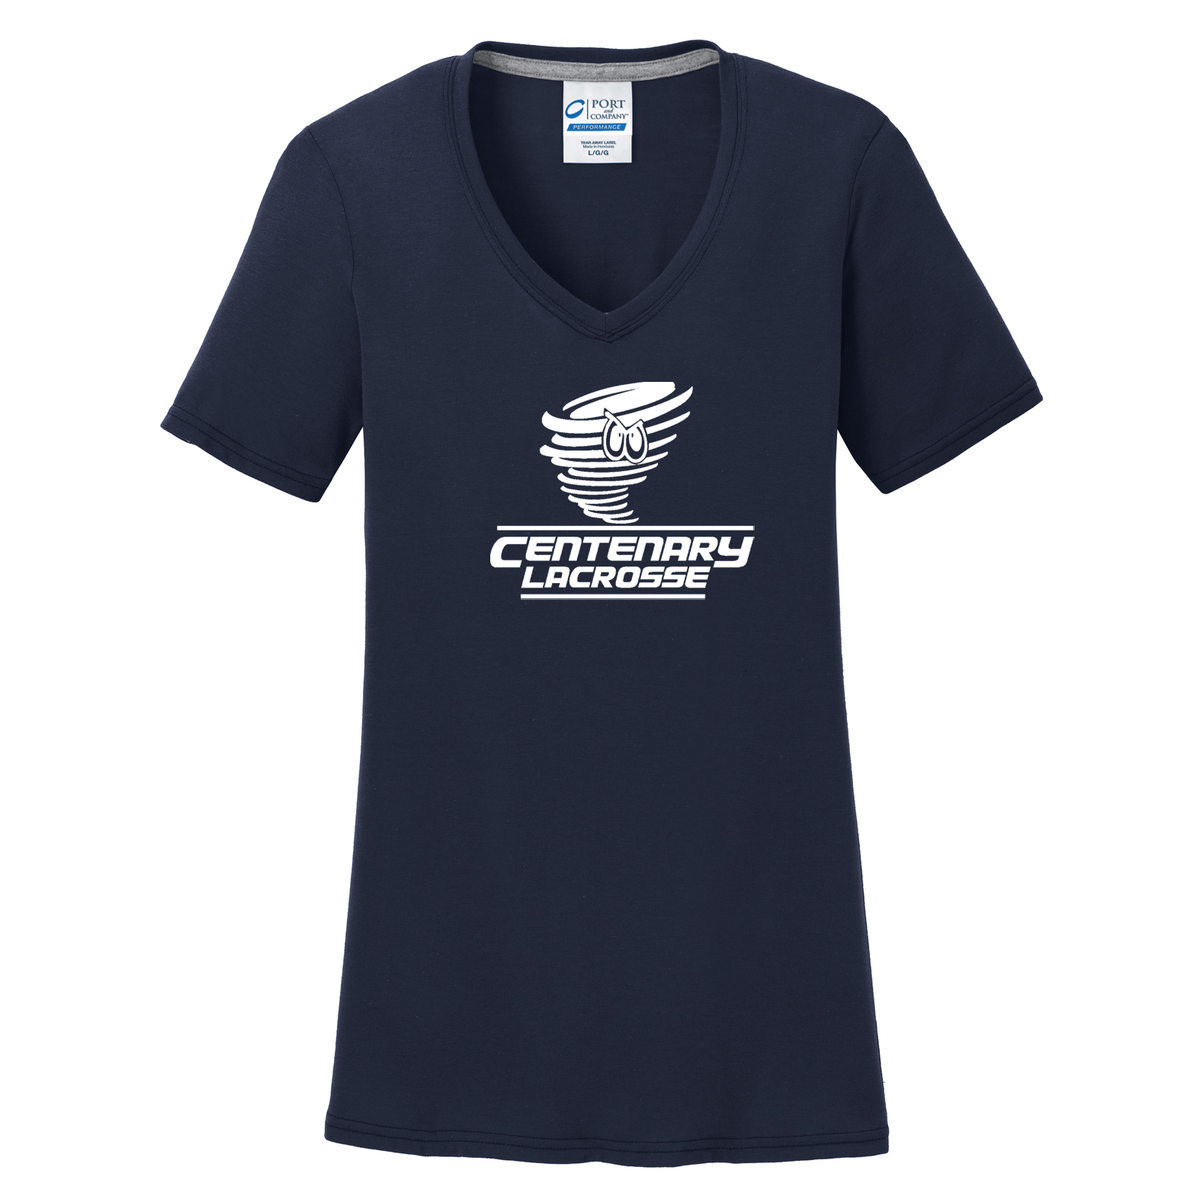 Centenary University Womens Lacrosse Women's T-Shirt